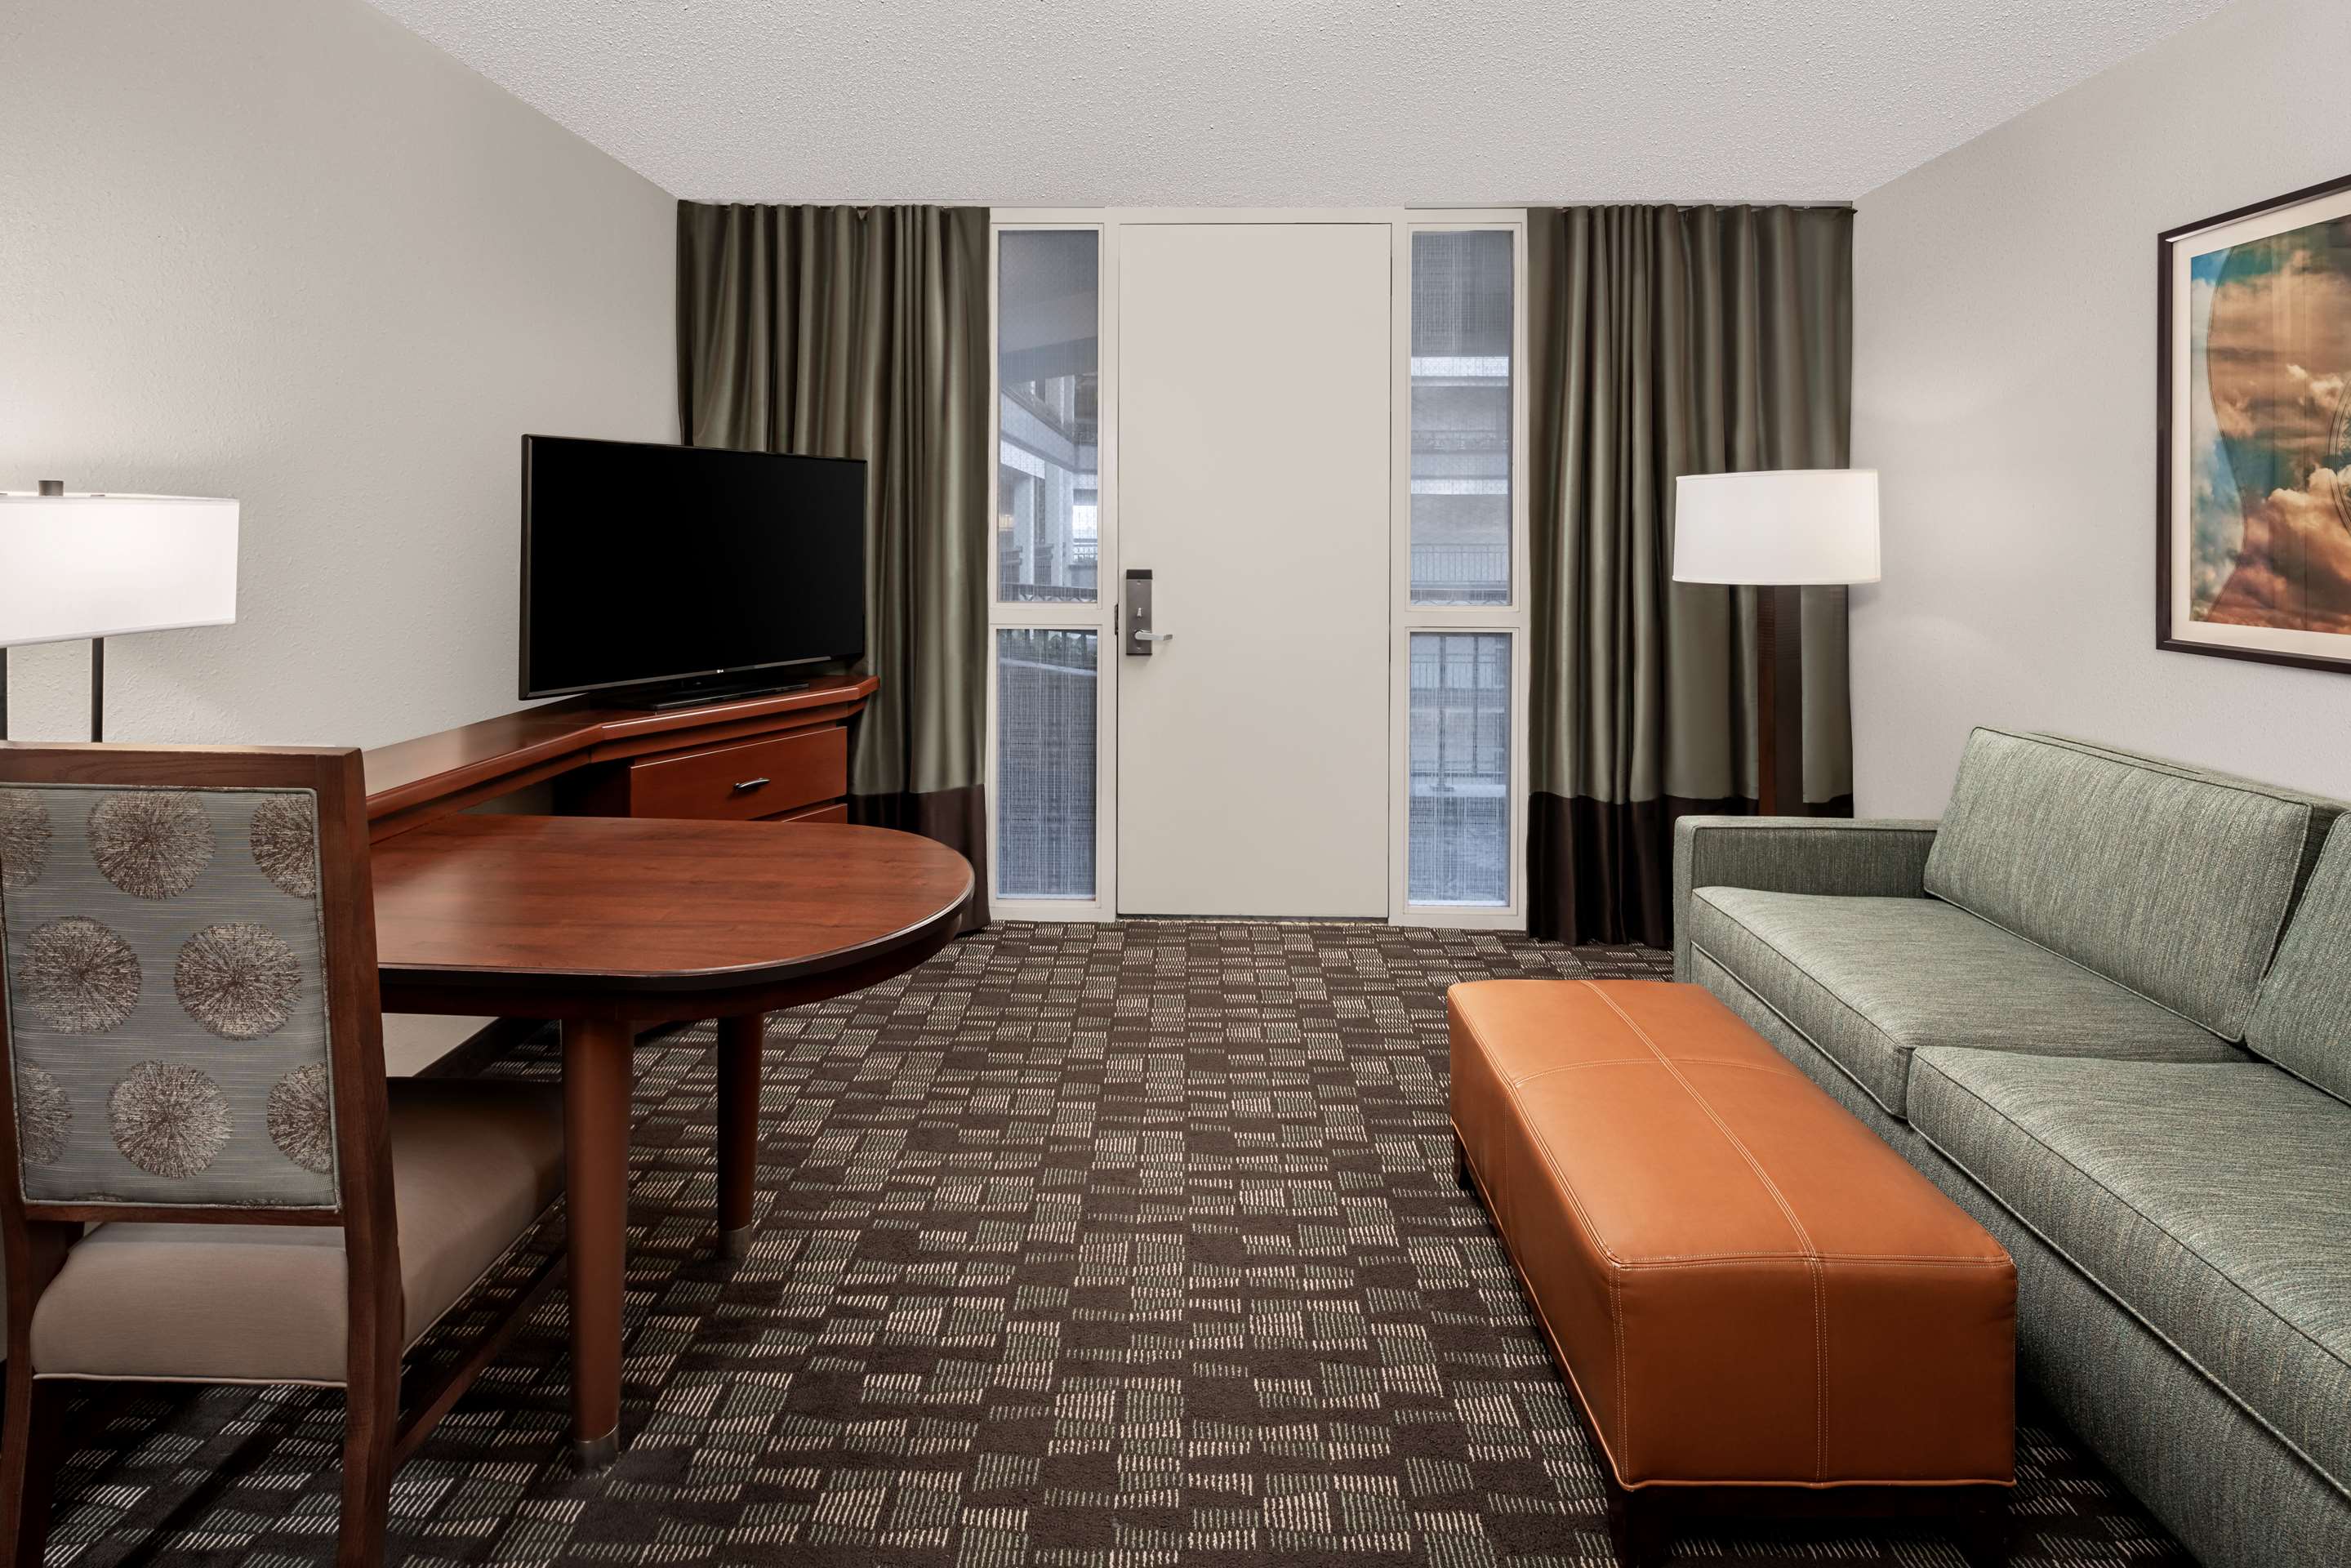 2 Room Premium Suite-1 King Bed + 2 Room Premium Suite-1 King Bed